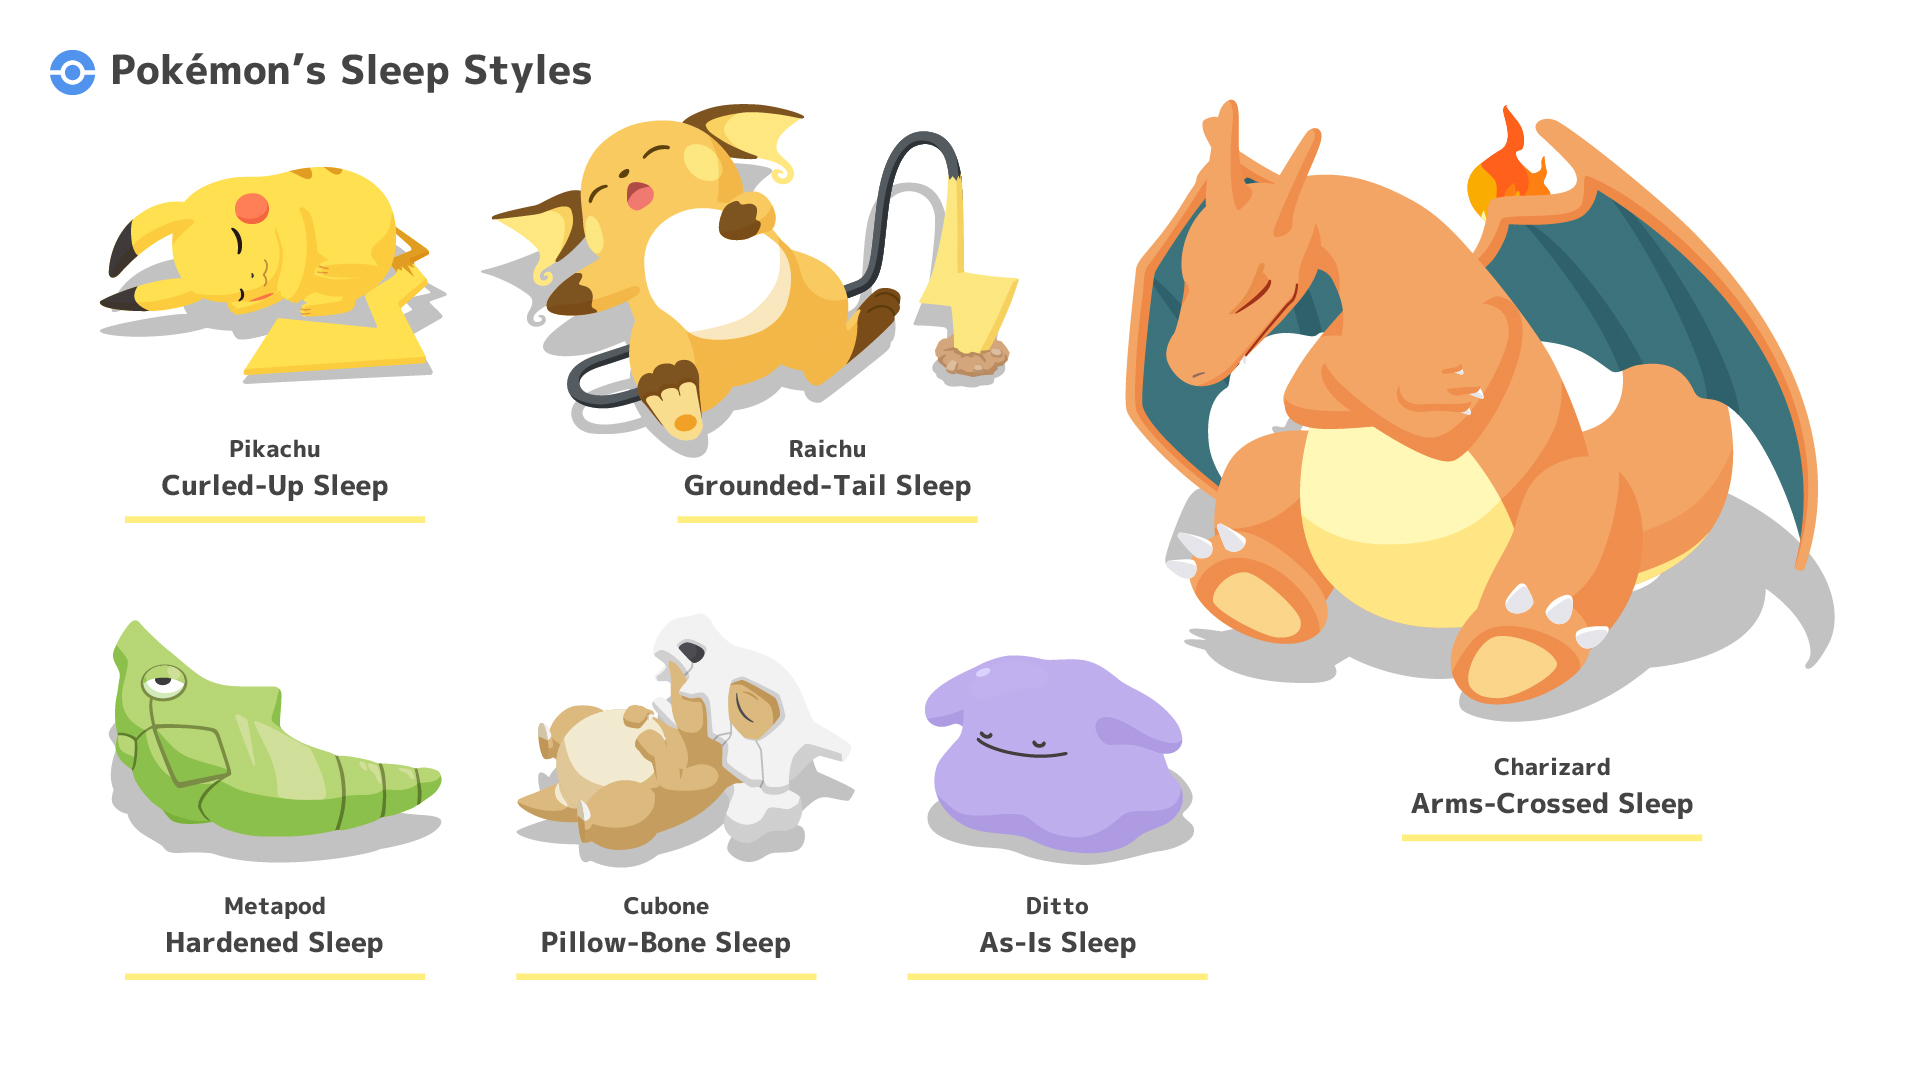 A selection of Pokémon's Sleep Styles